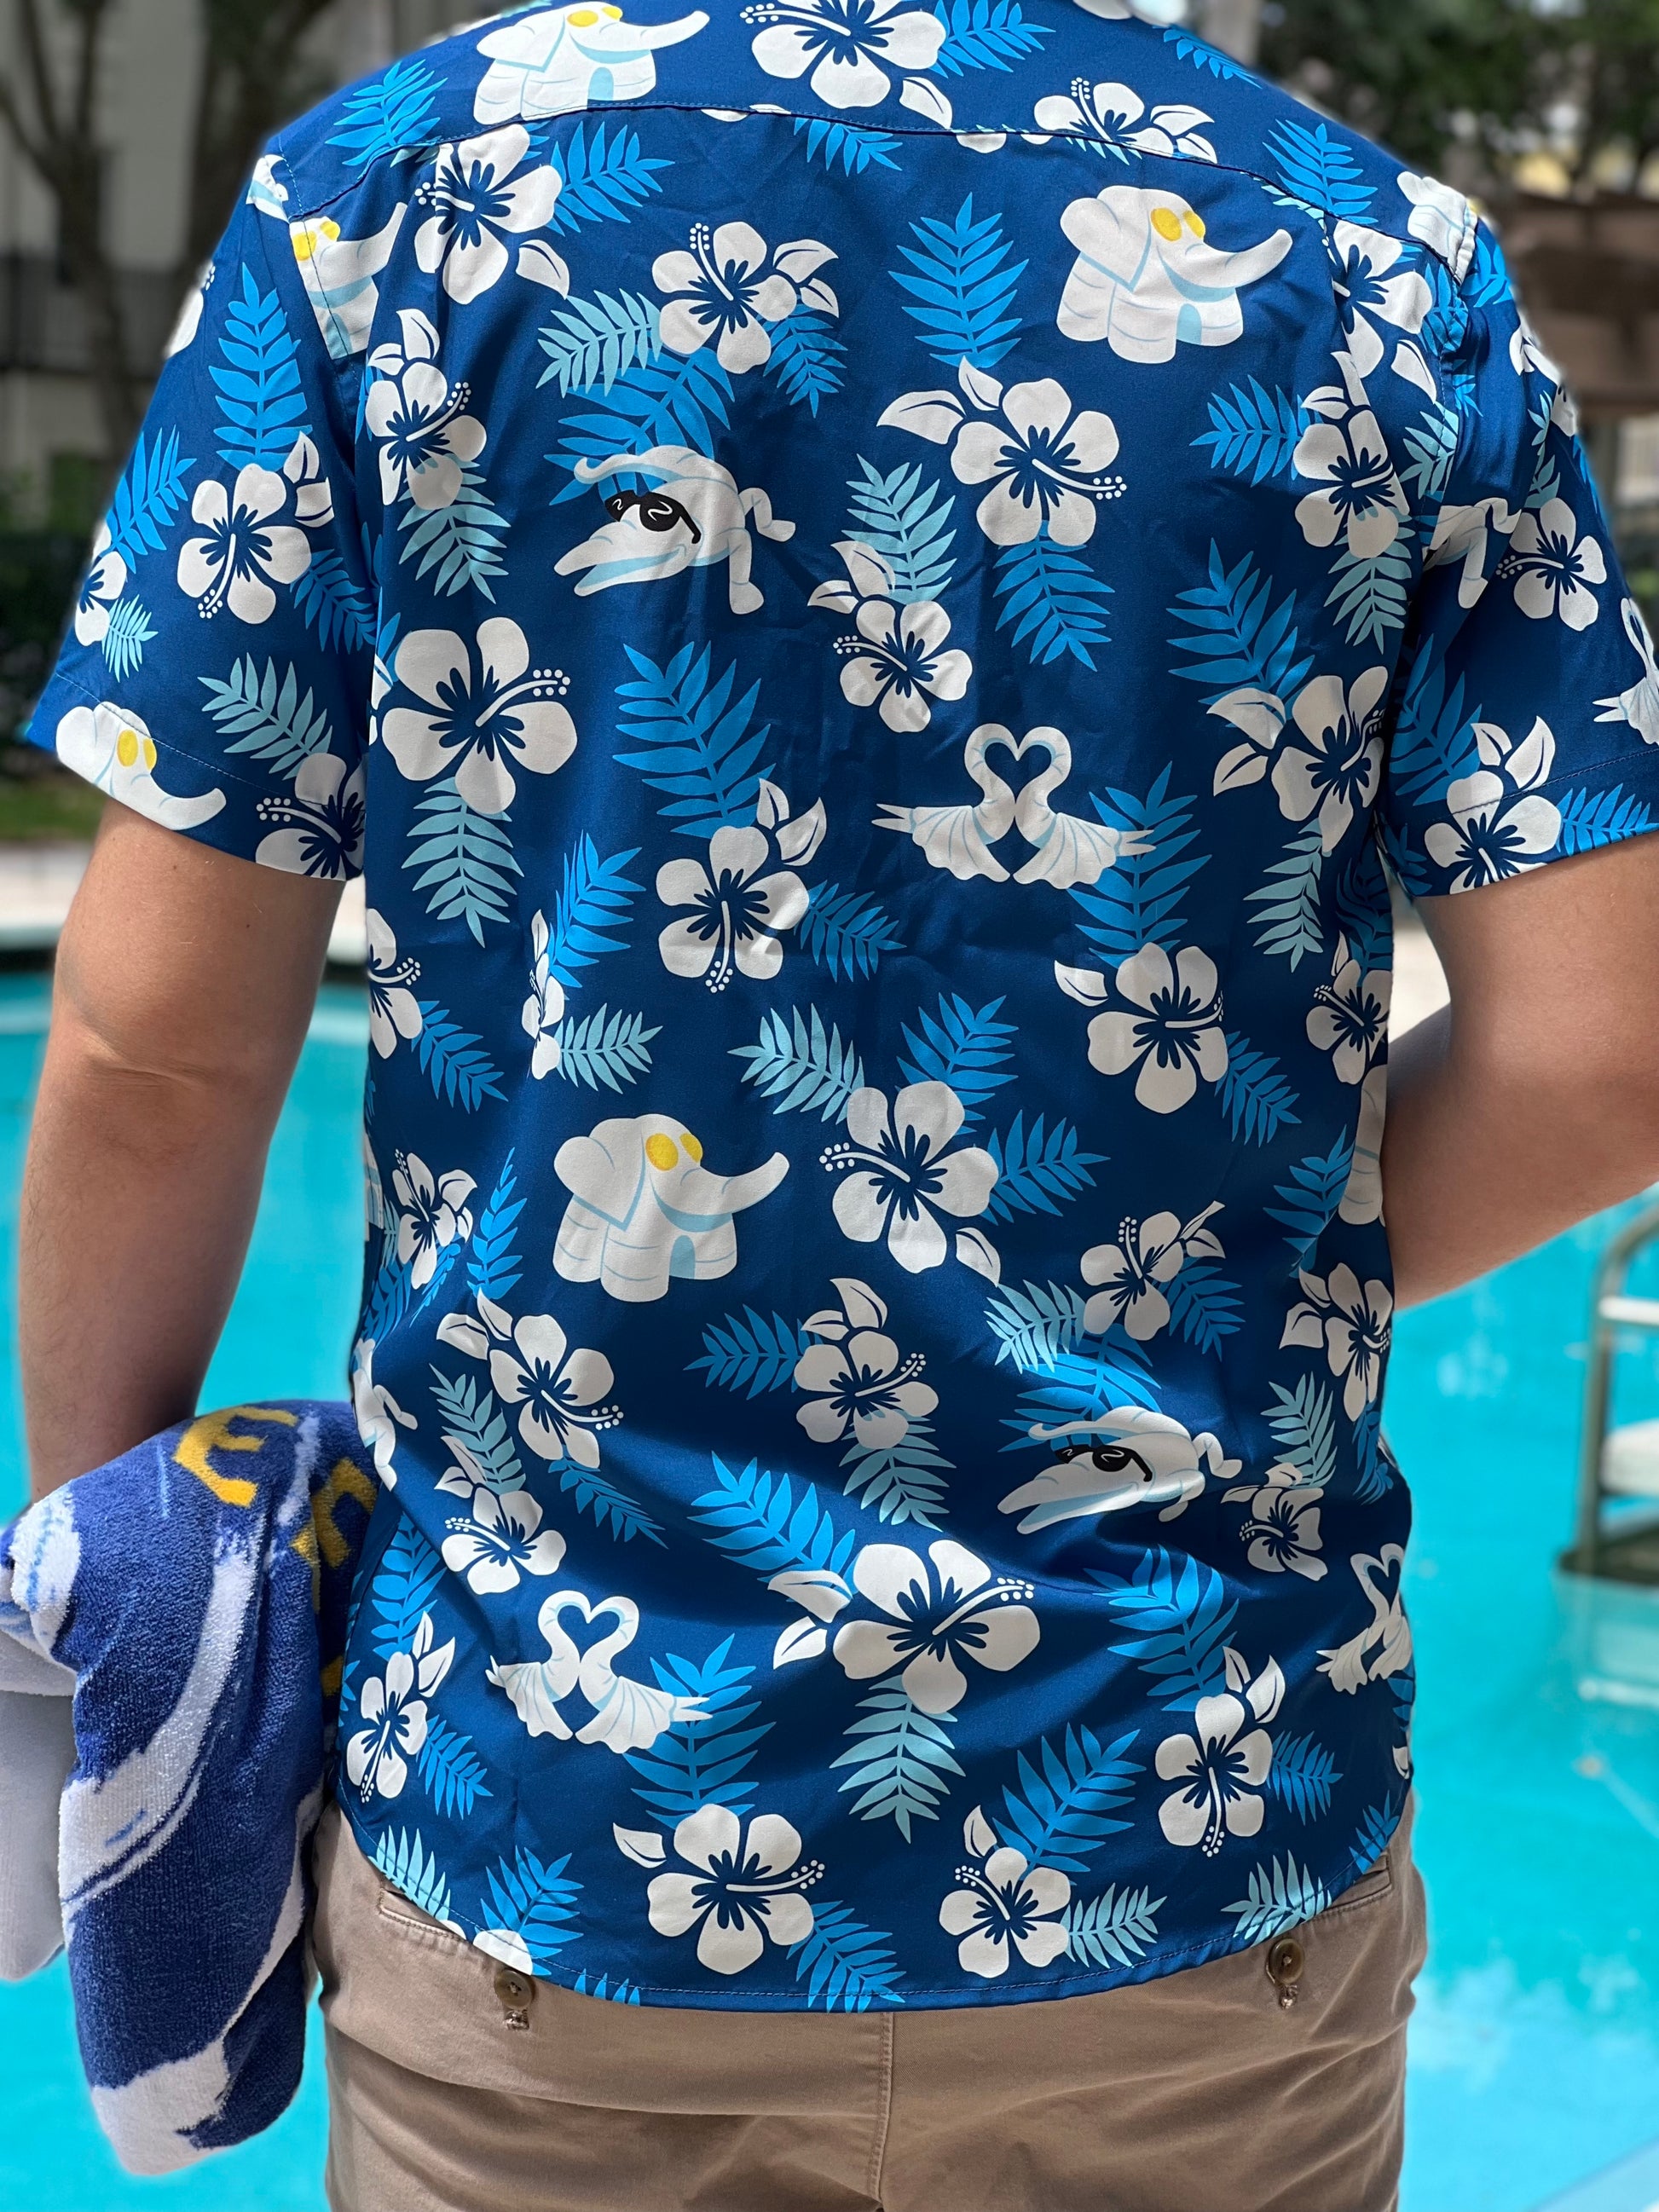 Views and Queues Cruise Towel Animal Tropical / Hawaiian Shirt Medium